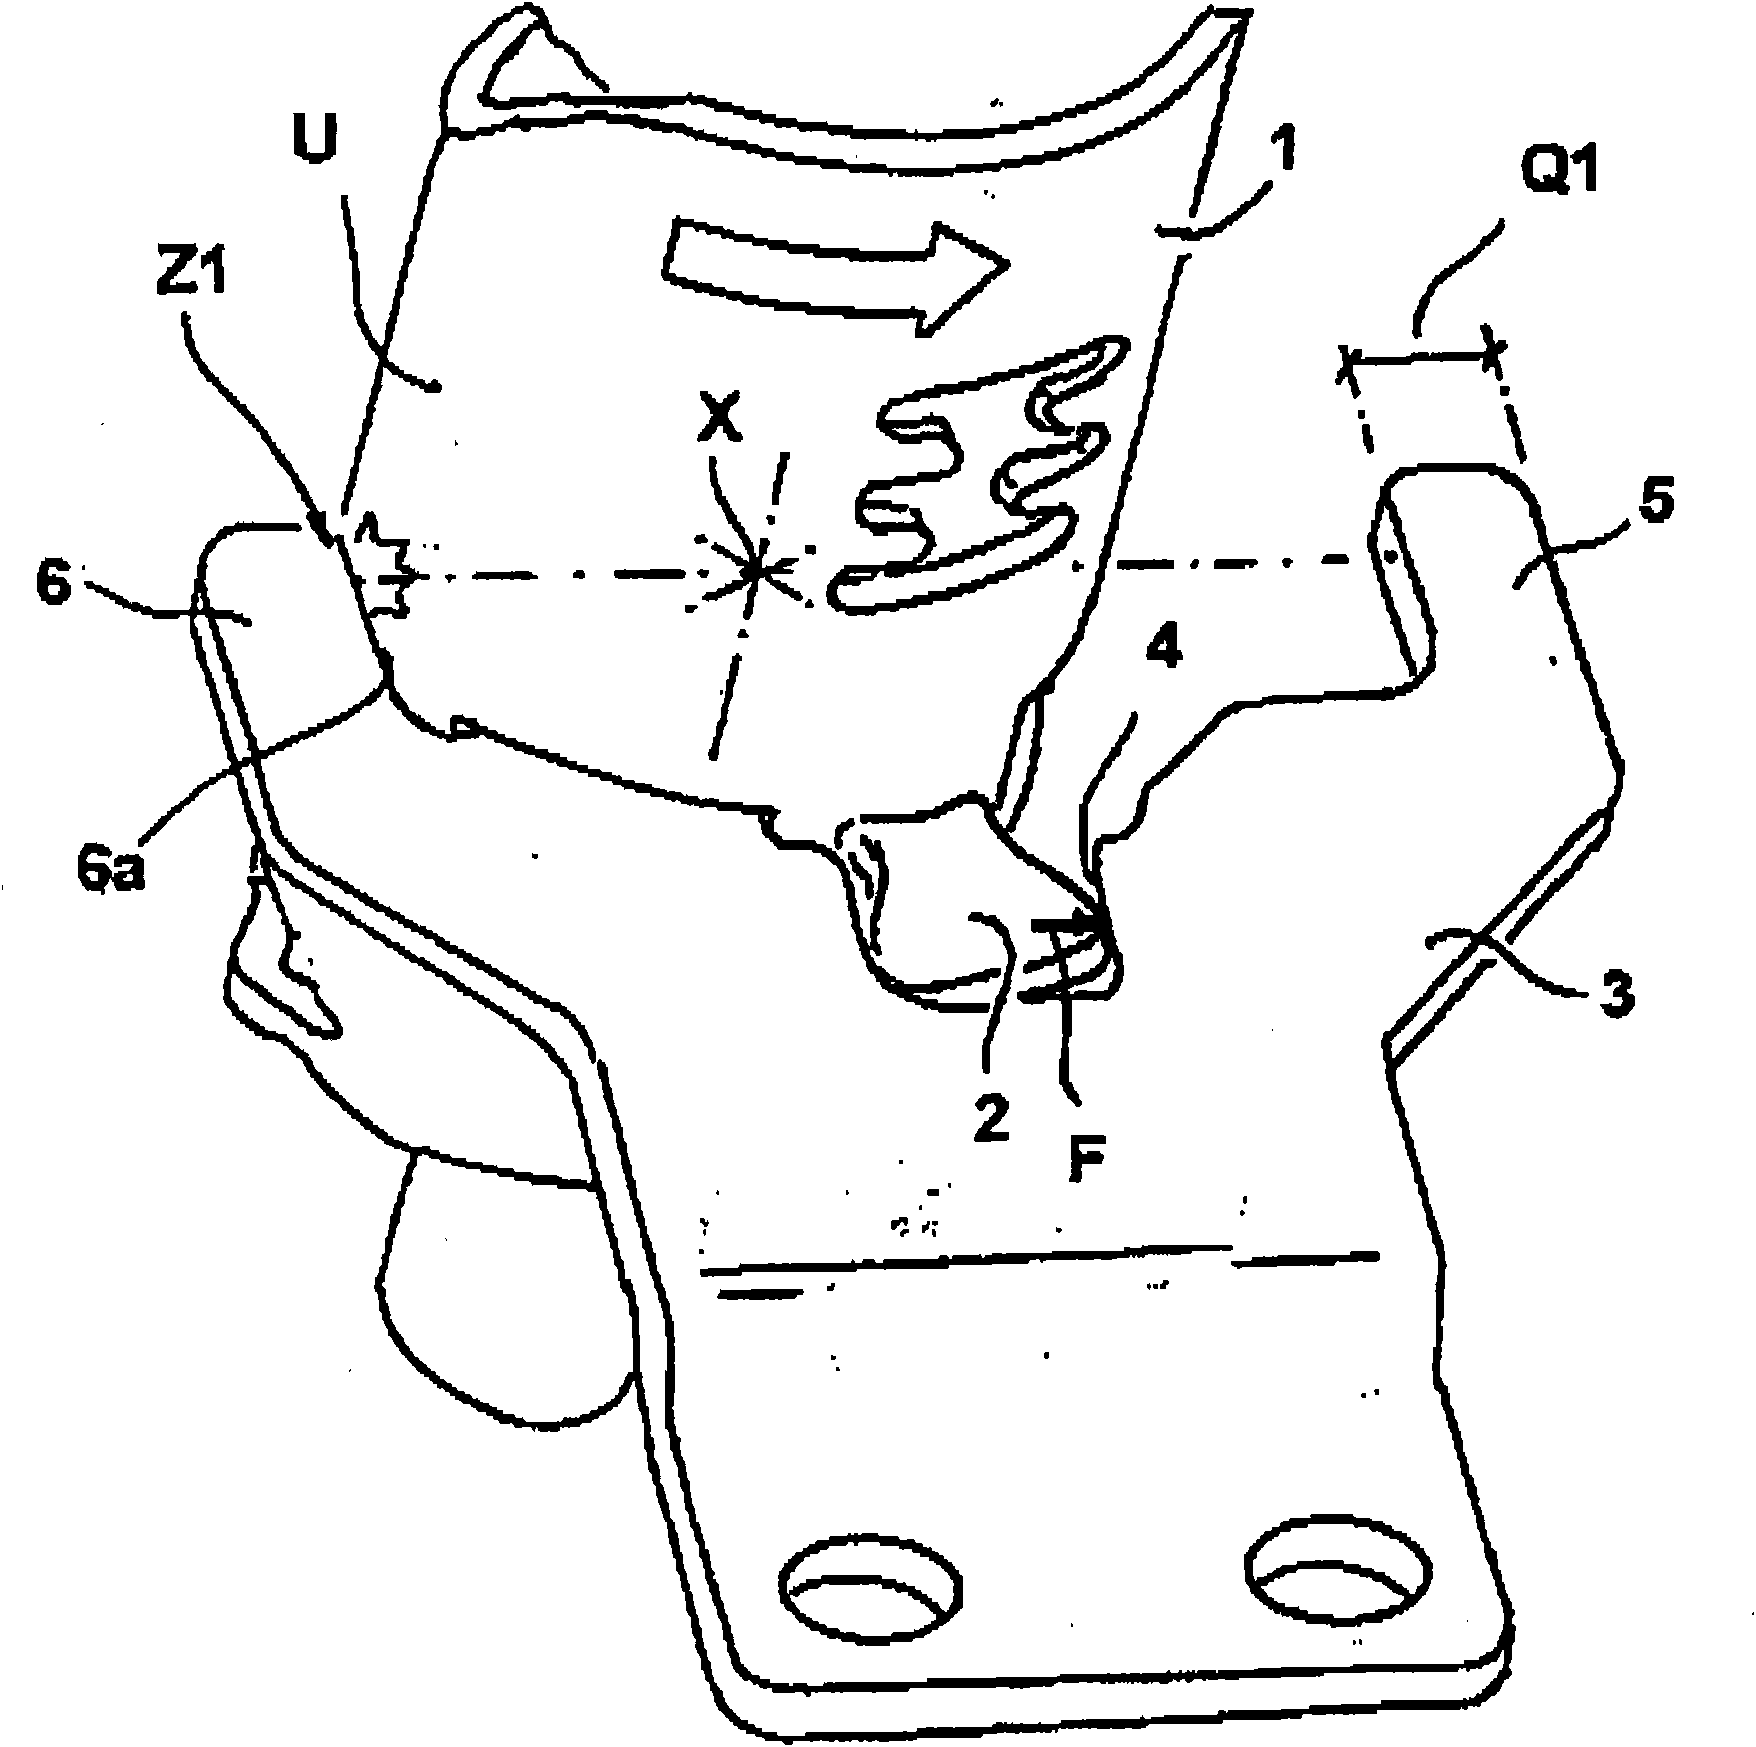 Shifter mechanism for shift gear box